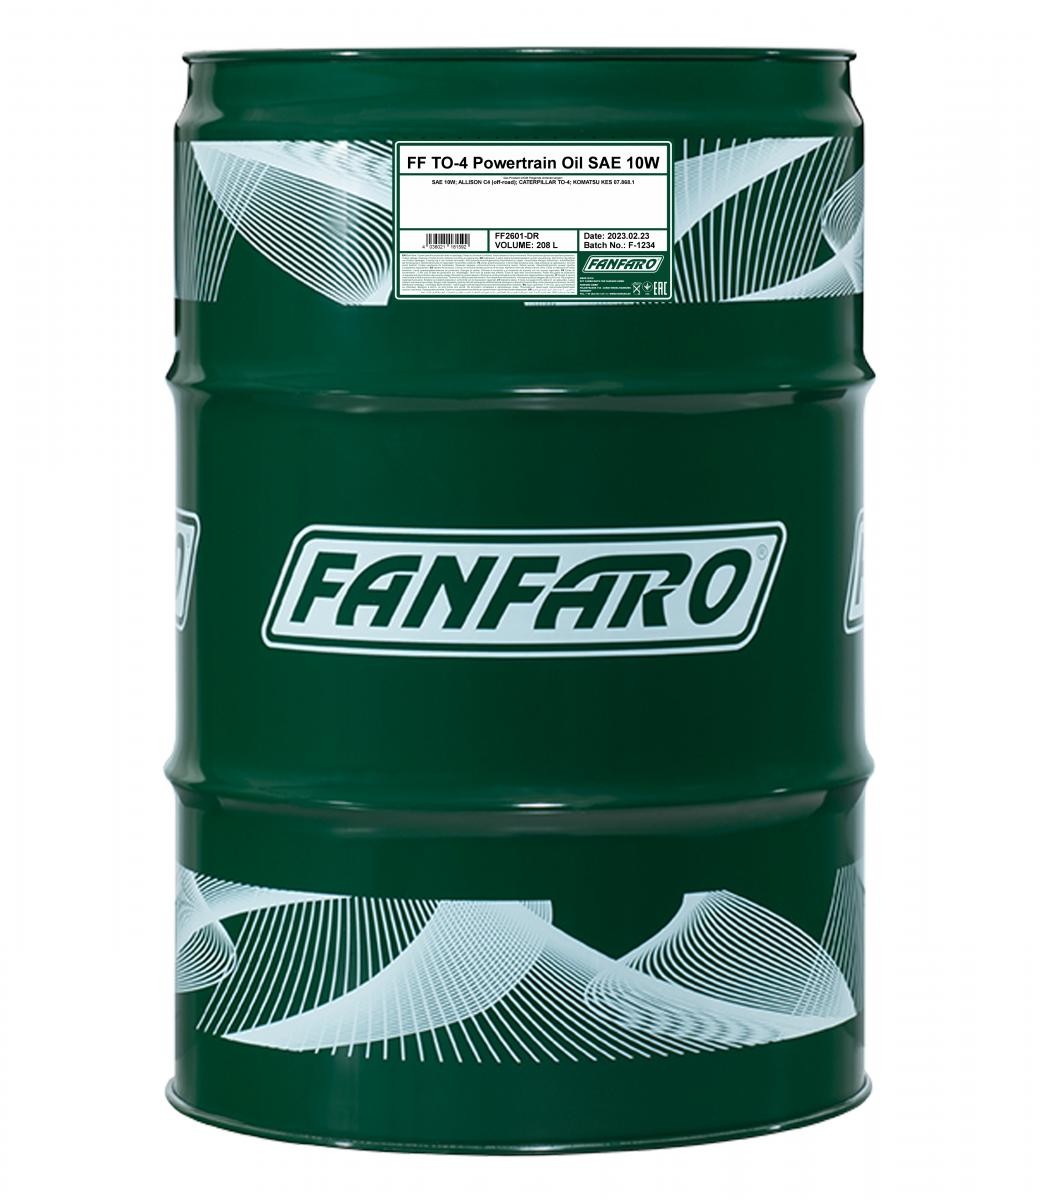 FANFARO TO-4 POWERTRAIN OIL FF2601-DR Transmission fluid 10W, Capacity: 208l